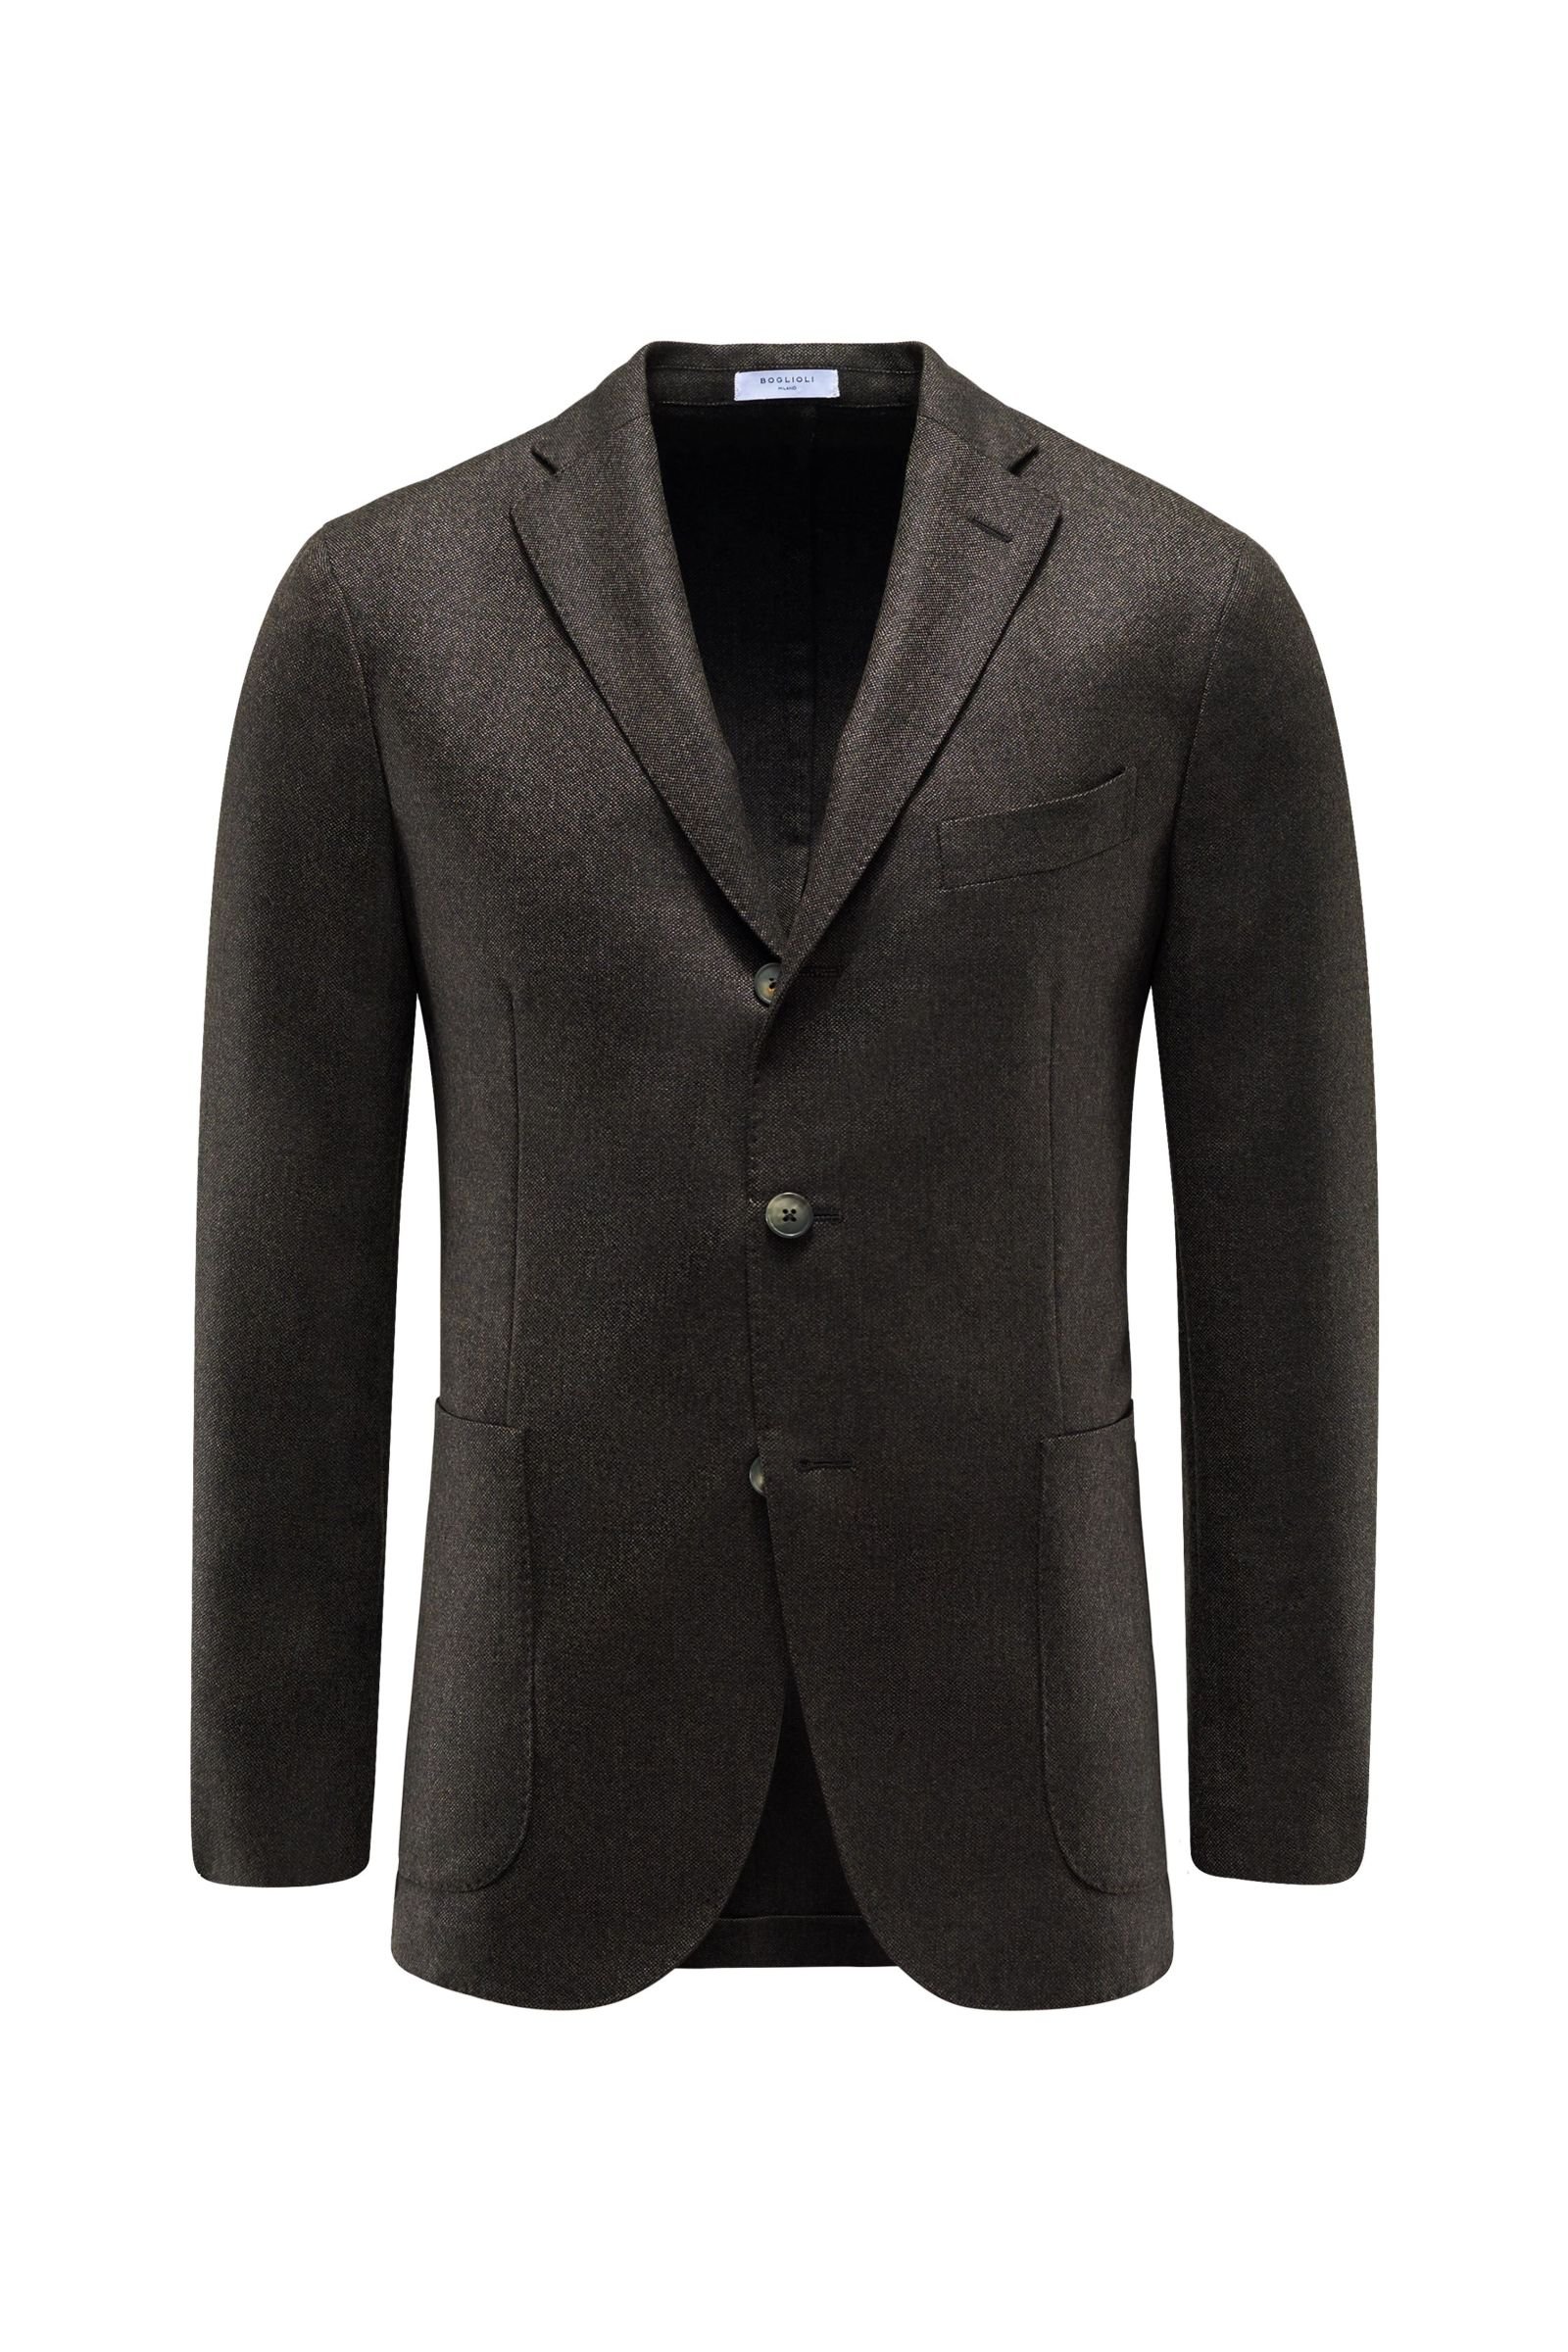 Smart-casual jacket 'Linea' dark brown